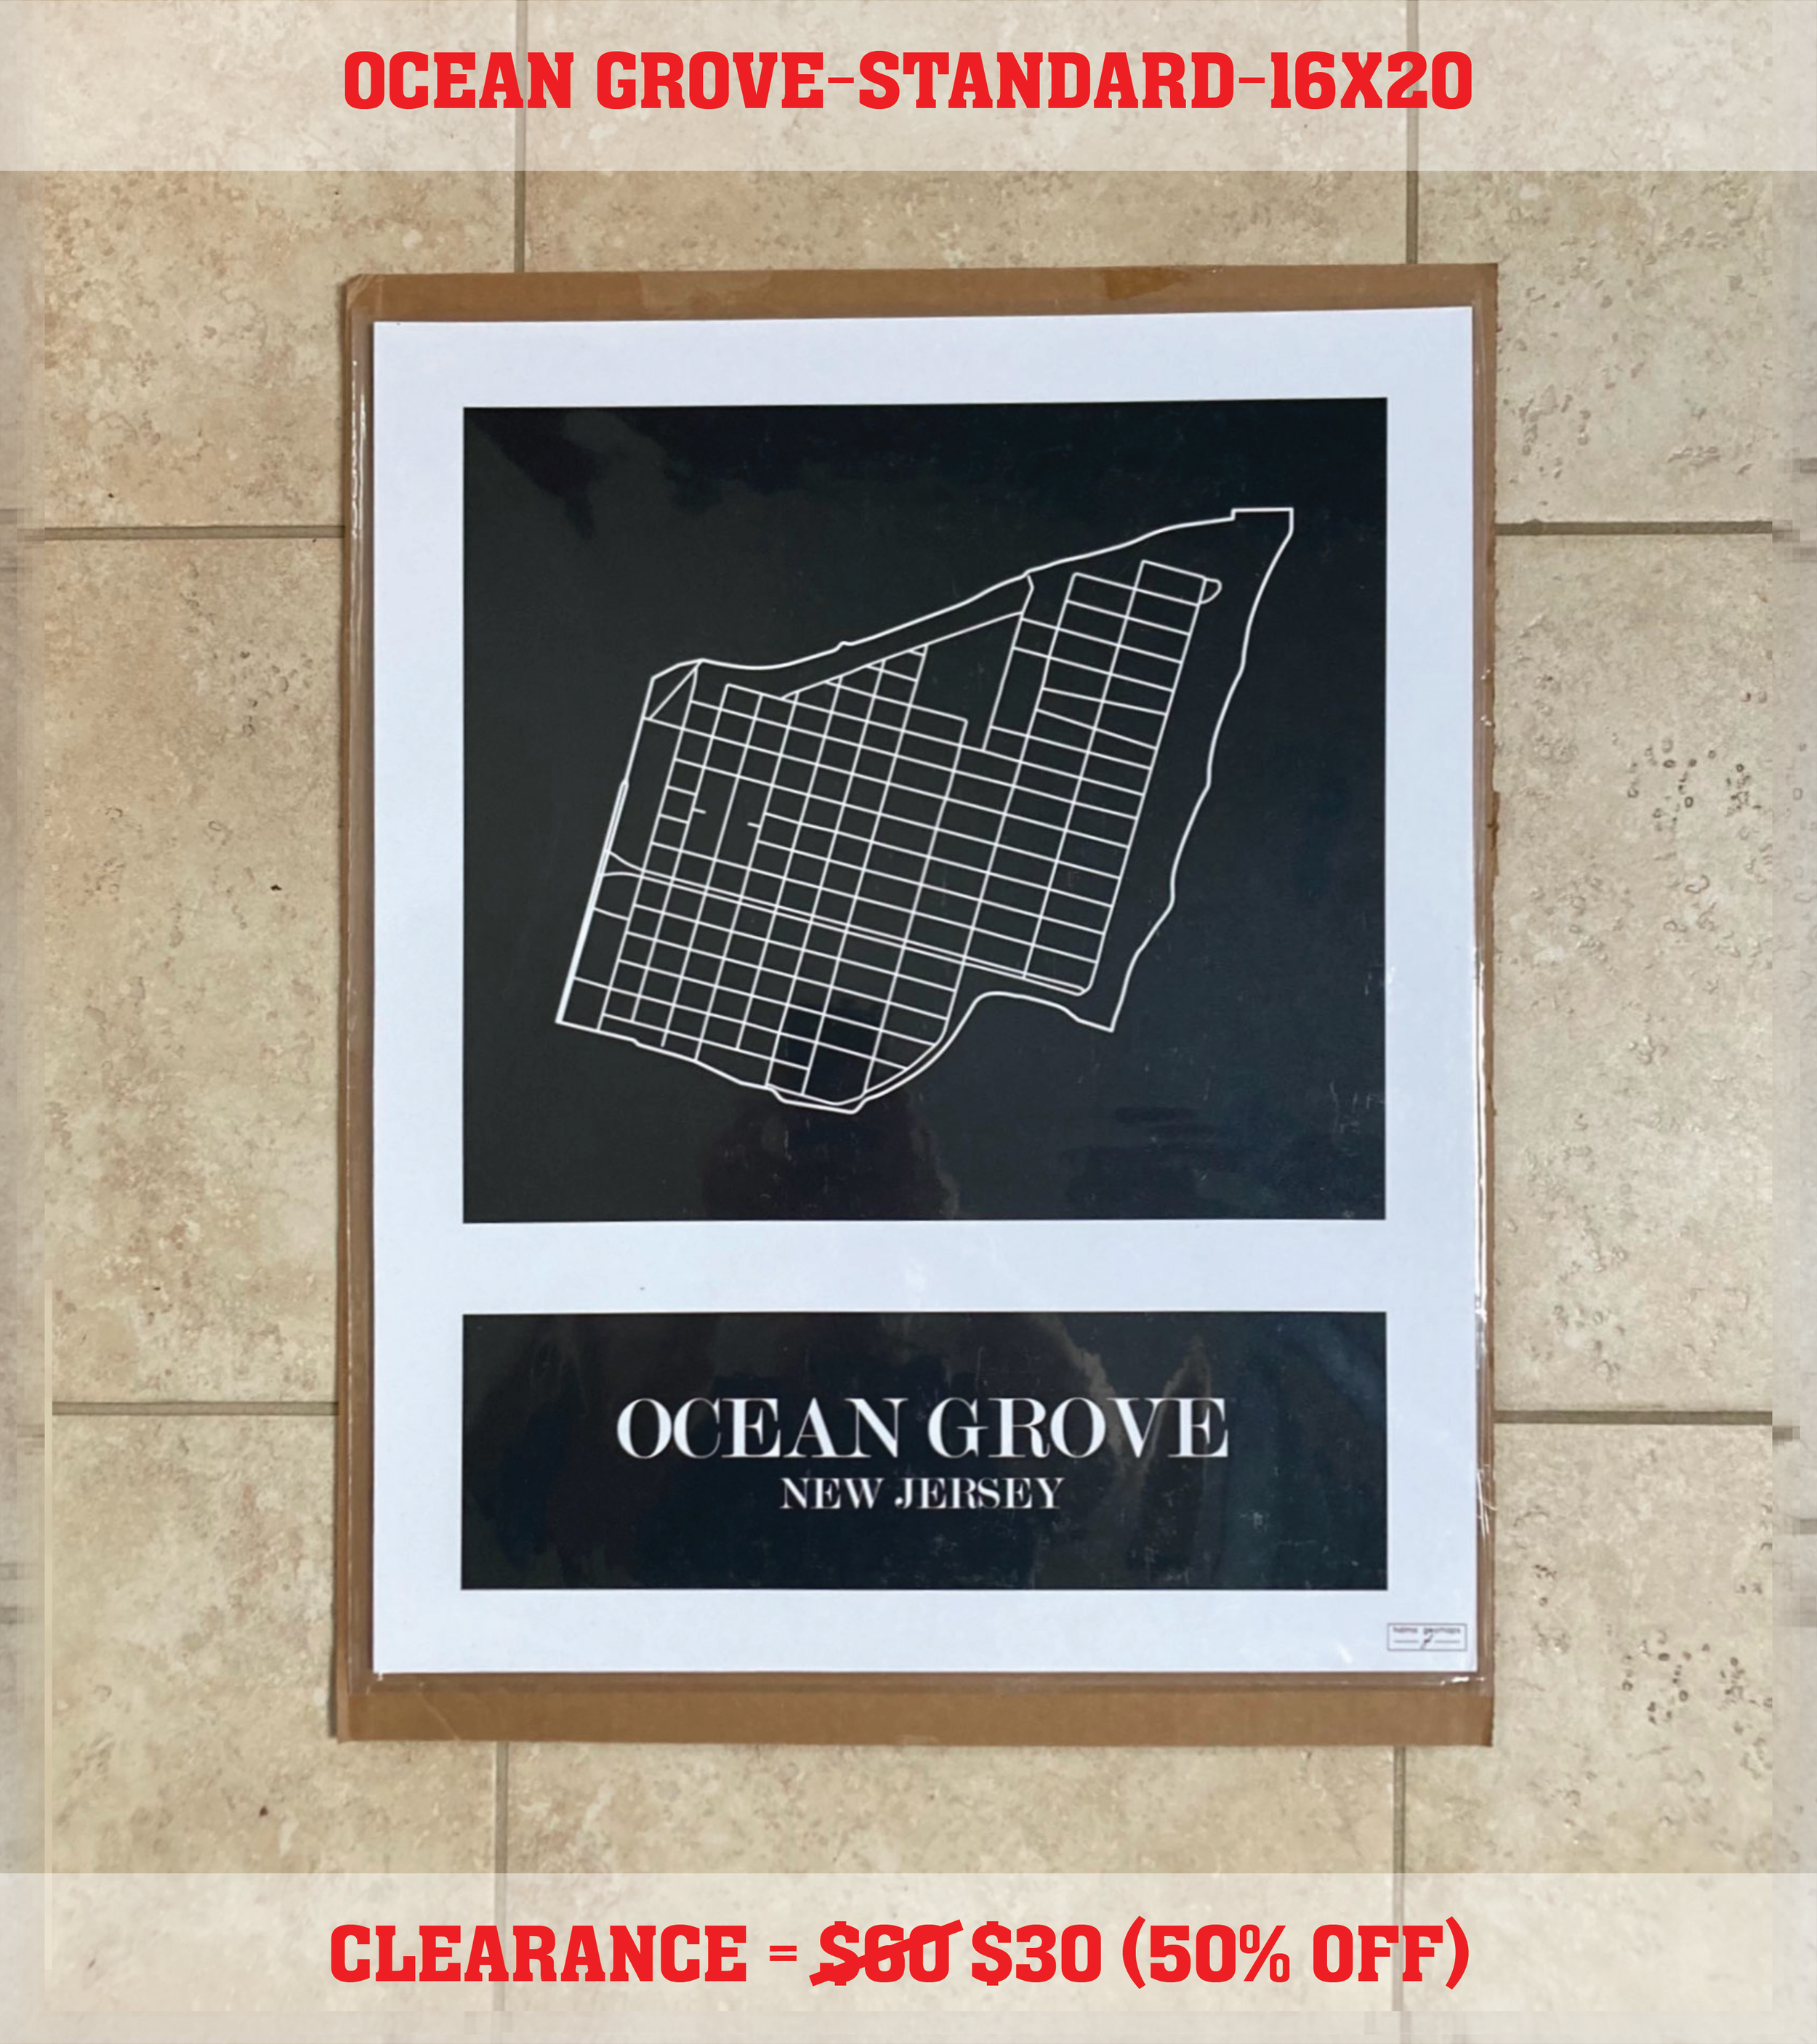 Ocean Grove (16x20) Standard